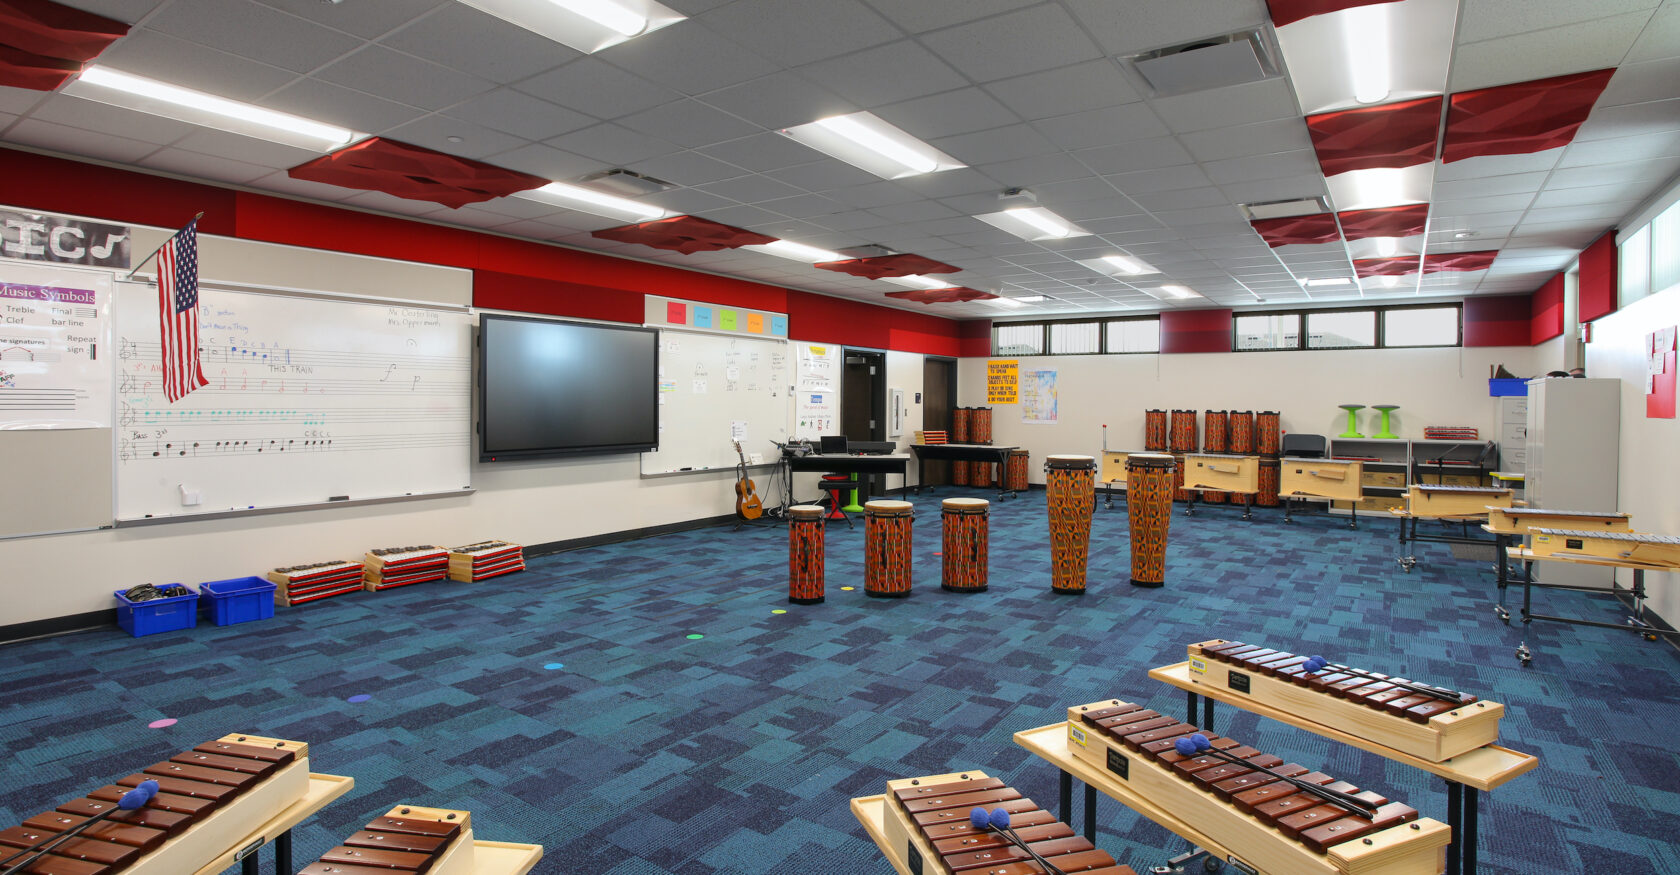 Belmont Elementary music classroom